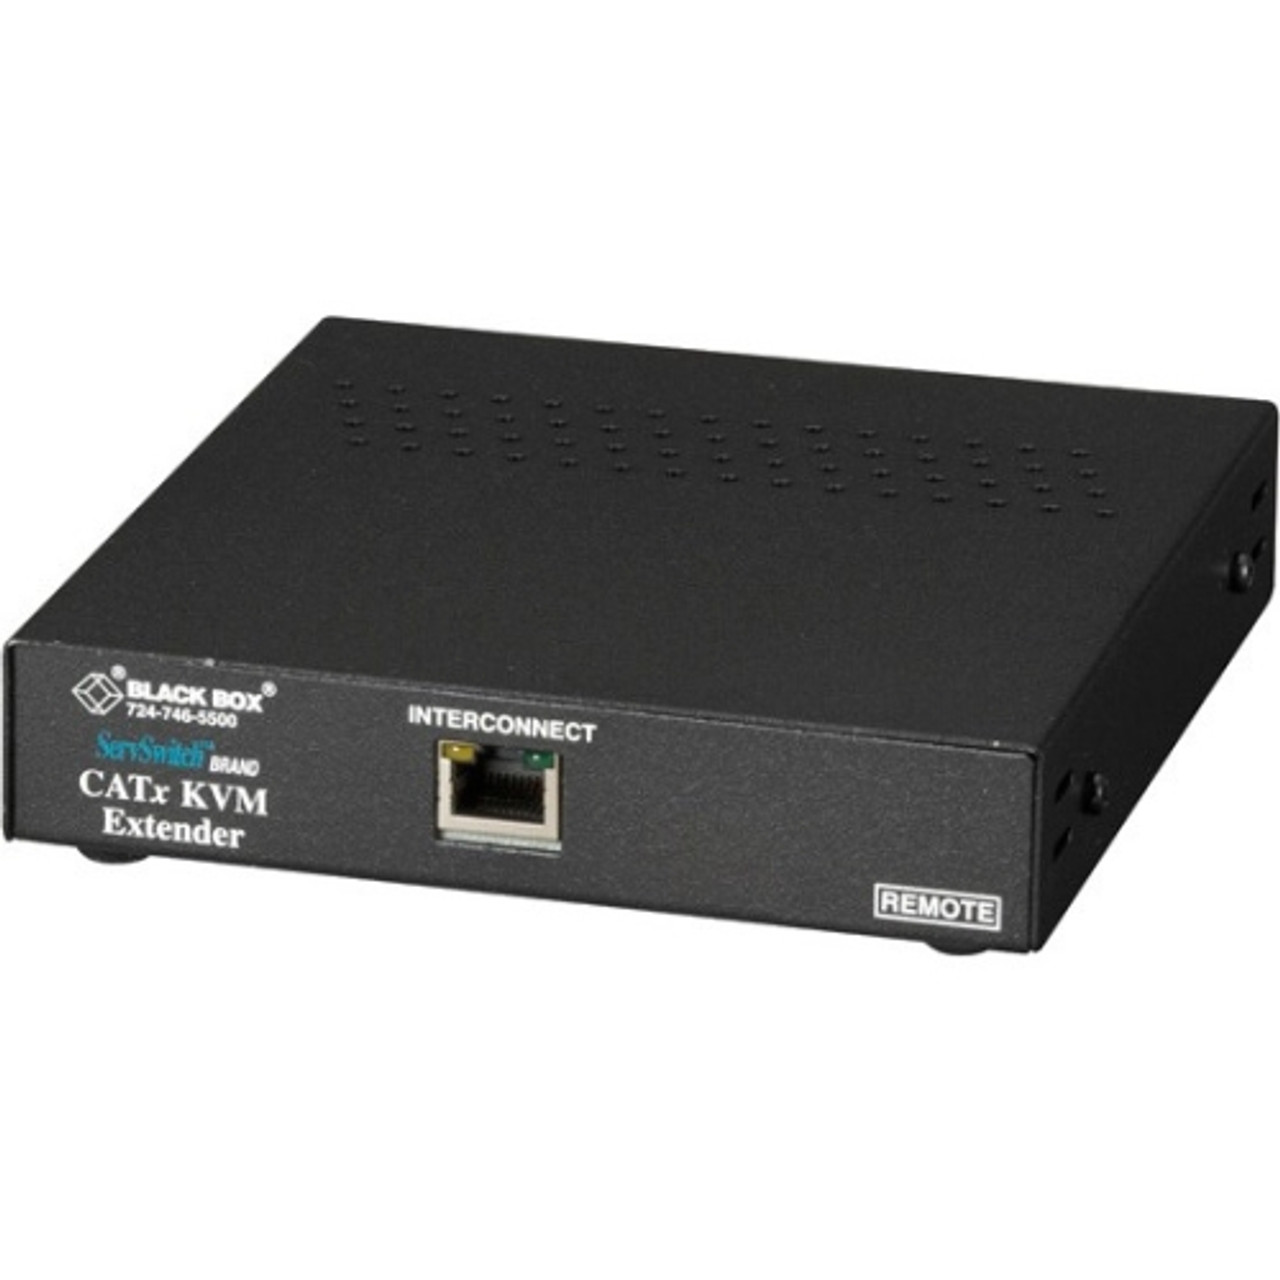 ACUR001A Black Box ServSwitch Single-Video CATx KVM Extender Standalone Remote Unit